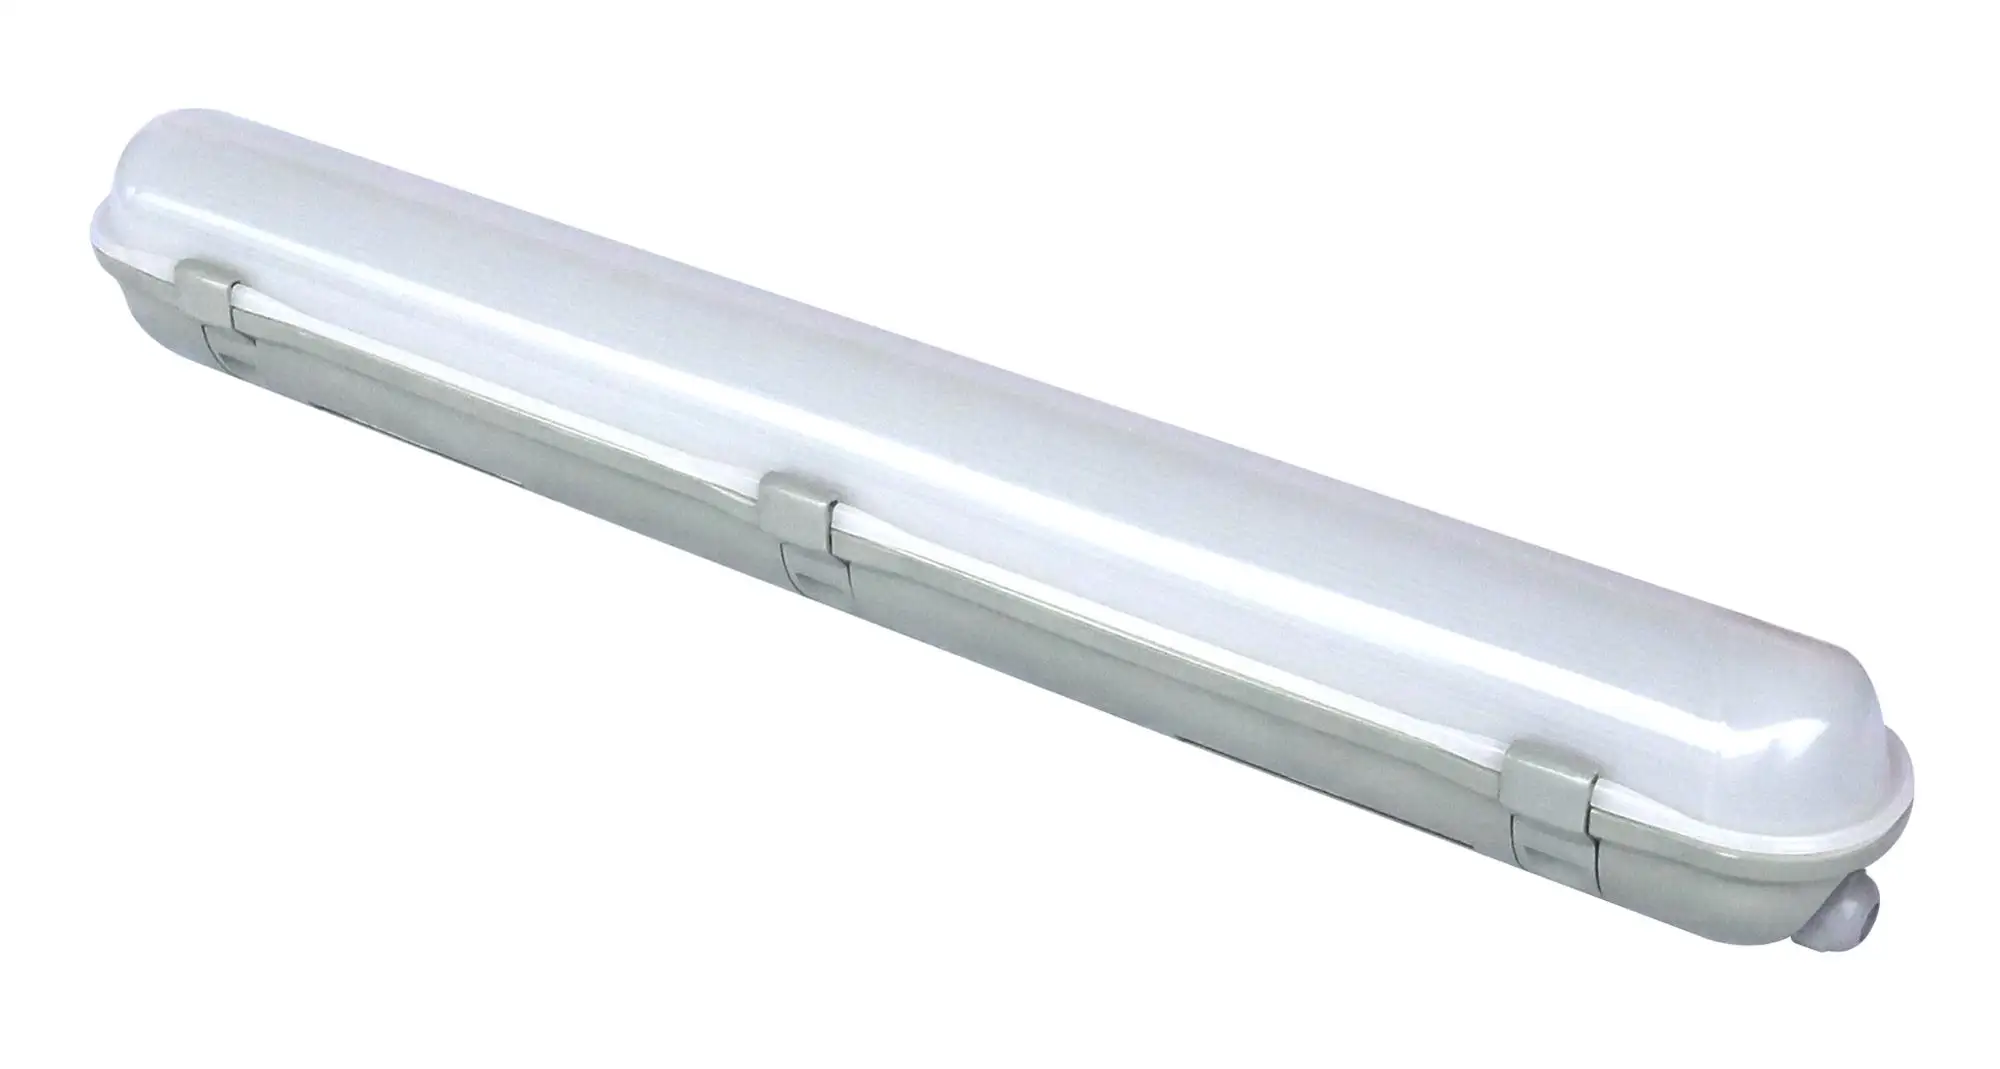 SMD5630 0.6m length IP65 Waterproof LED Lighting Fixture